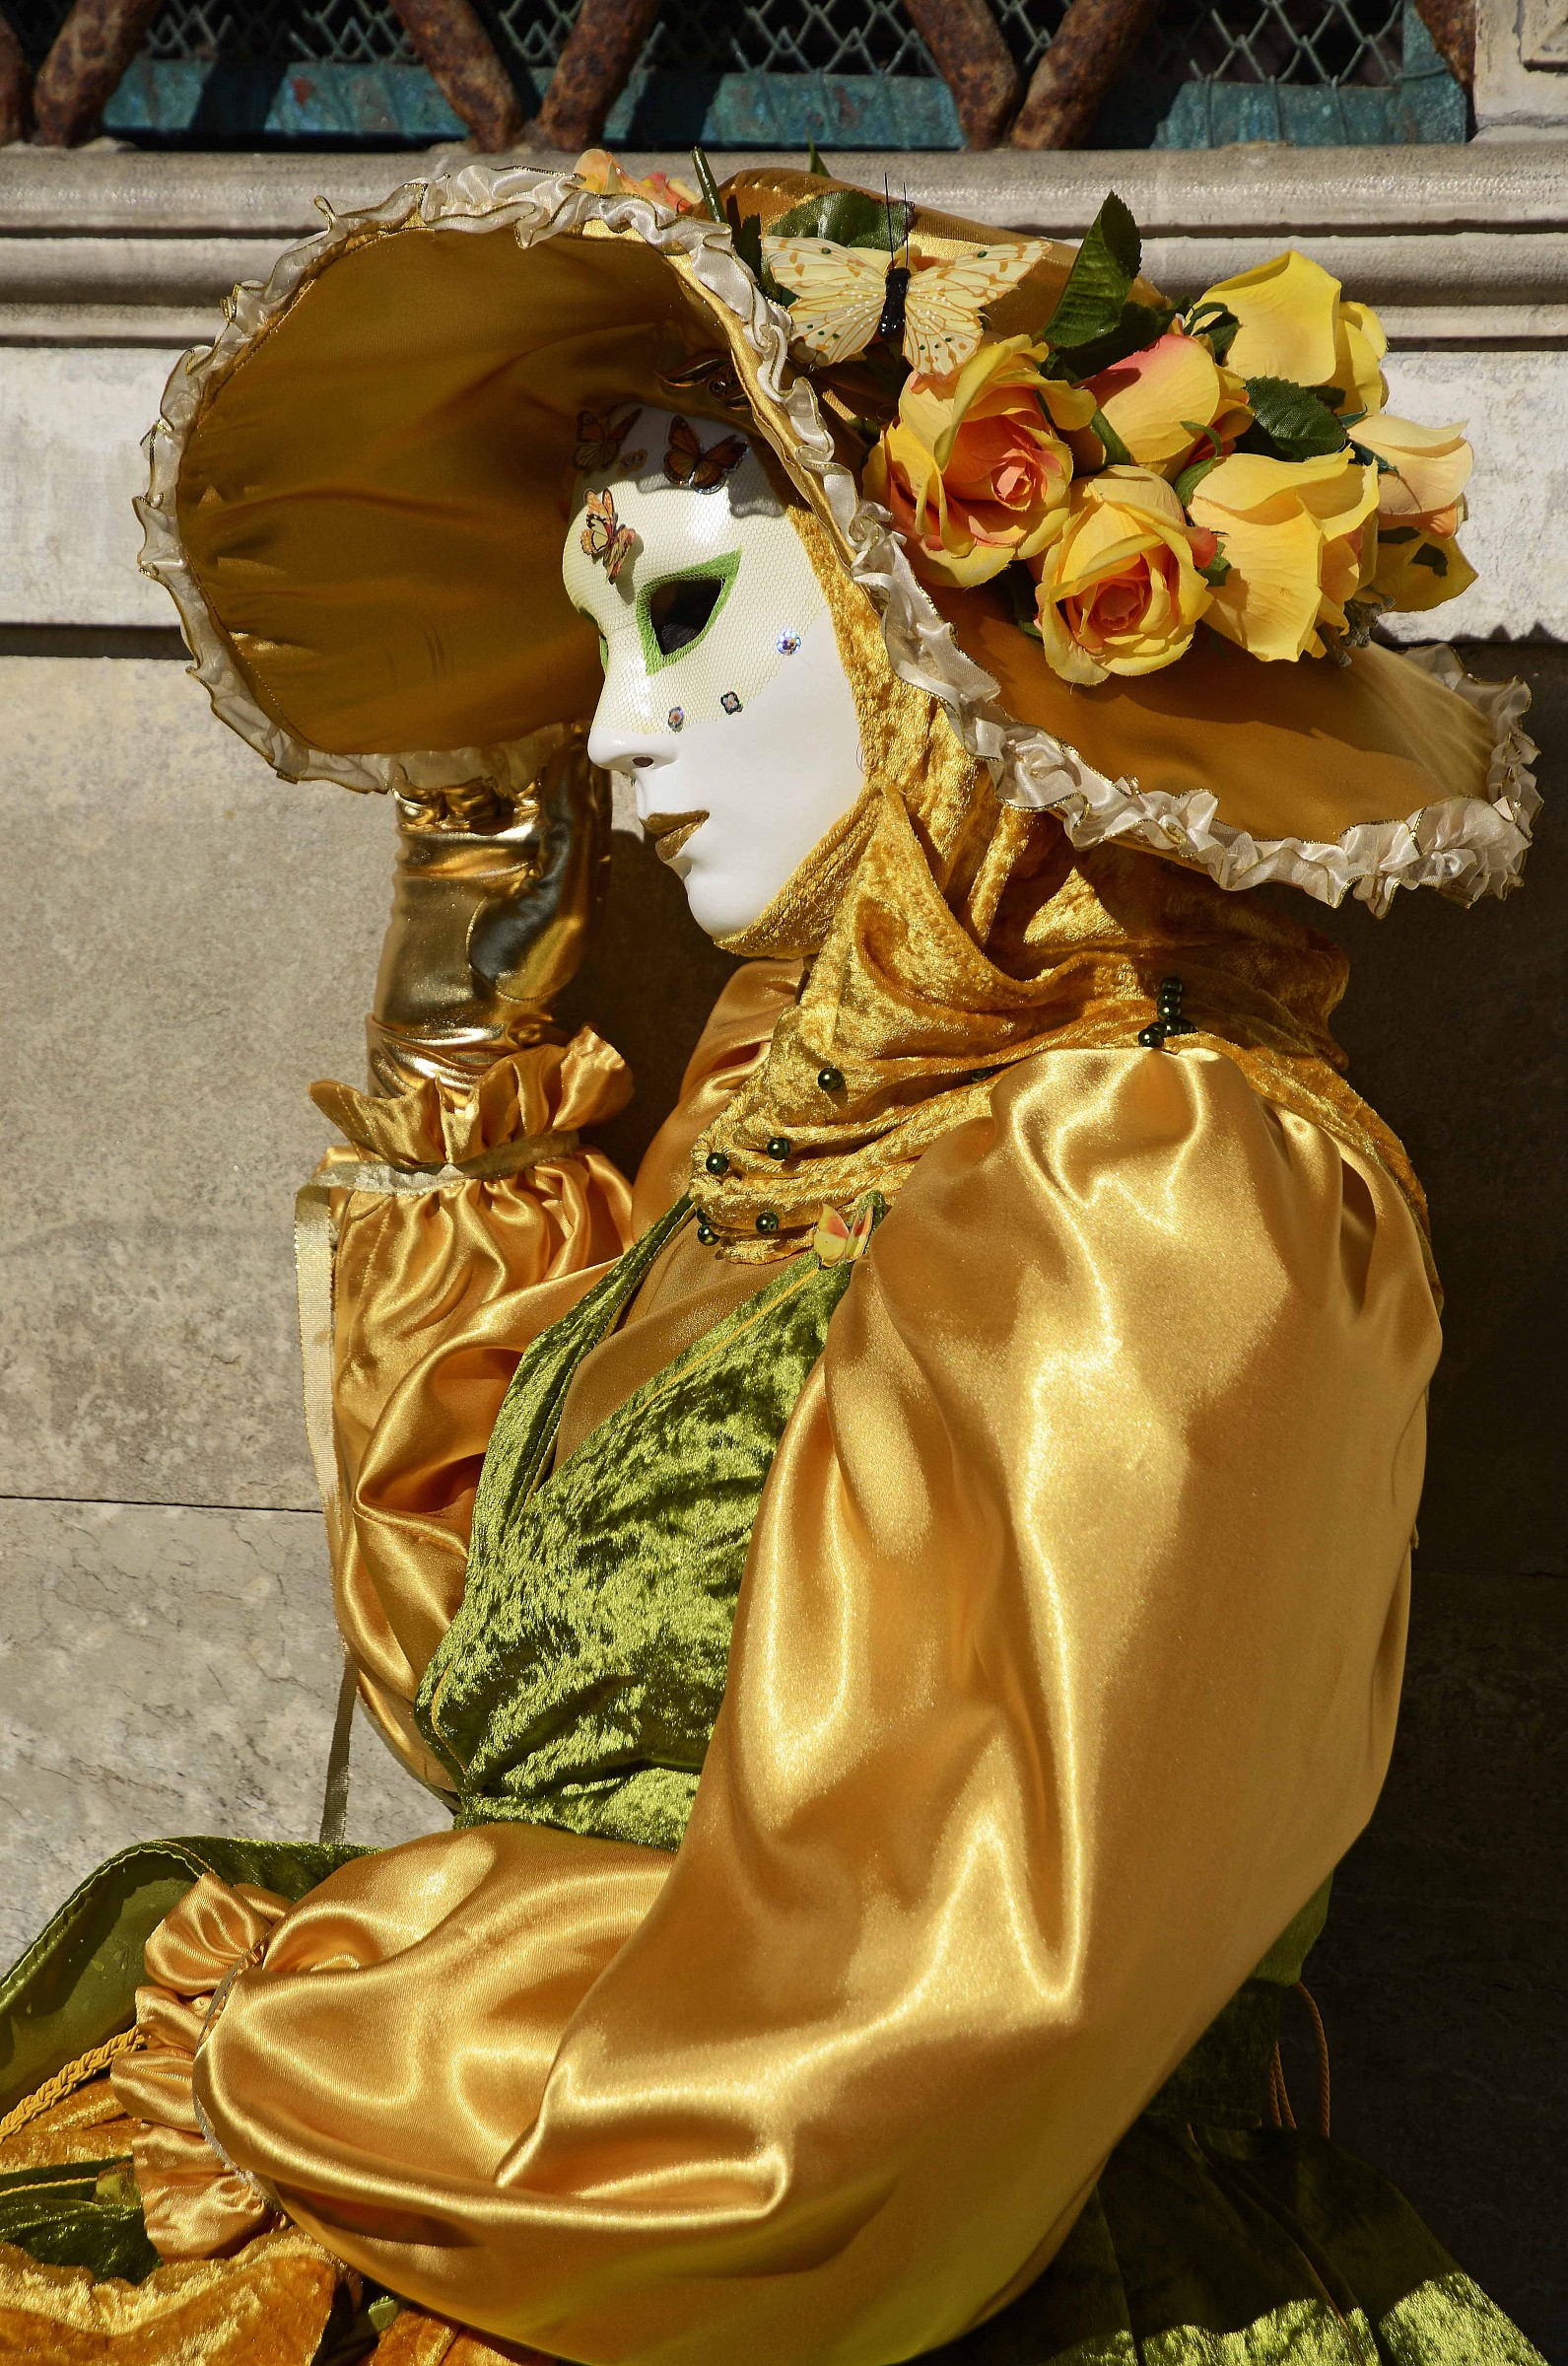 Maschera_2_Carnevale Venice 2015...